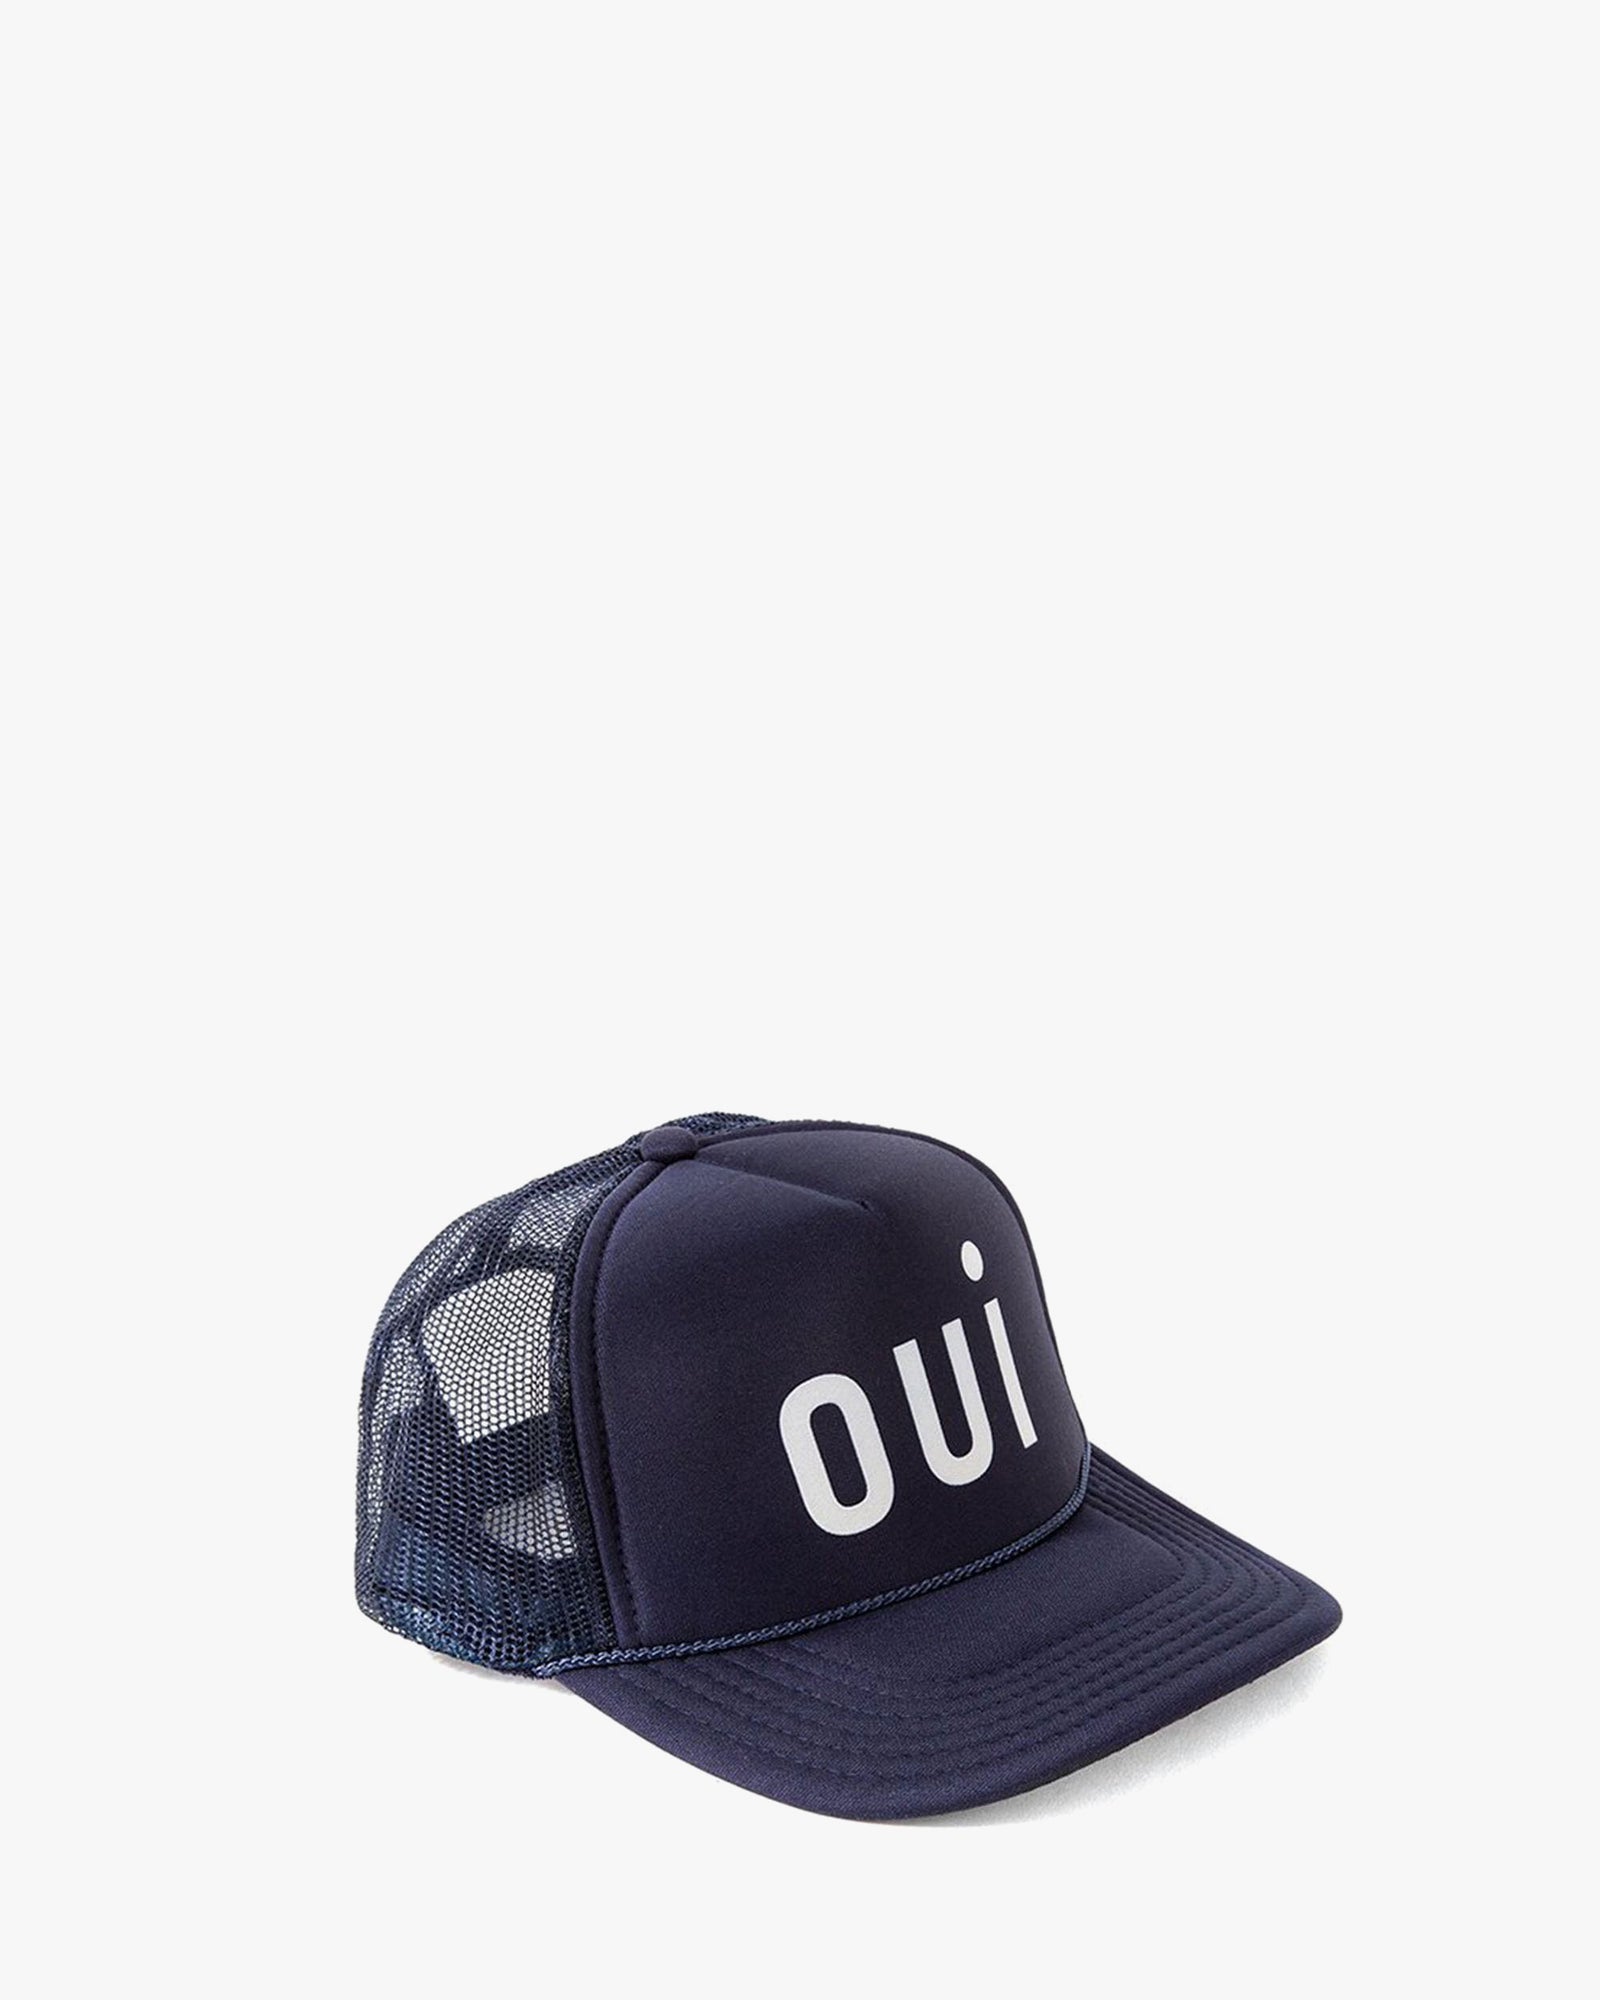 Clare V. Oui Baseball Hat